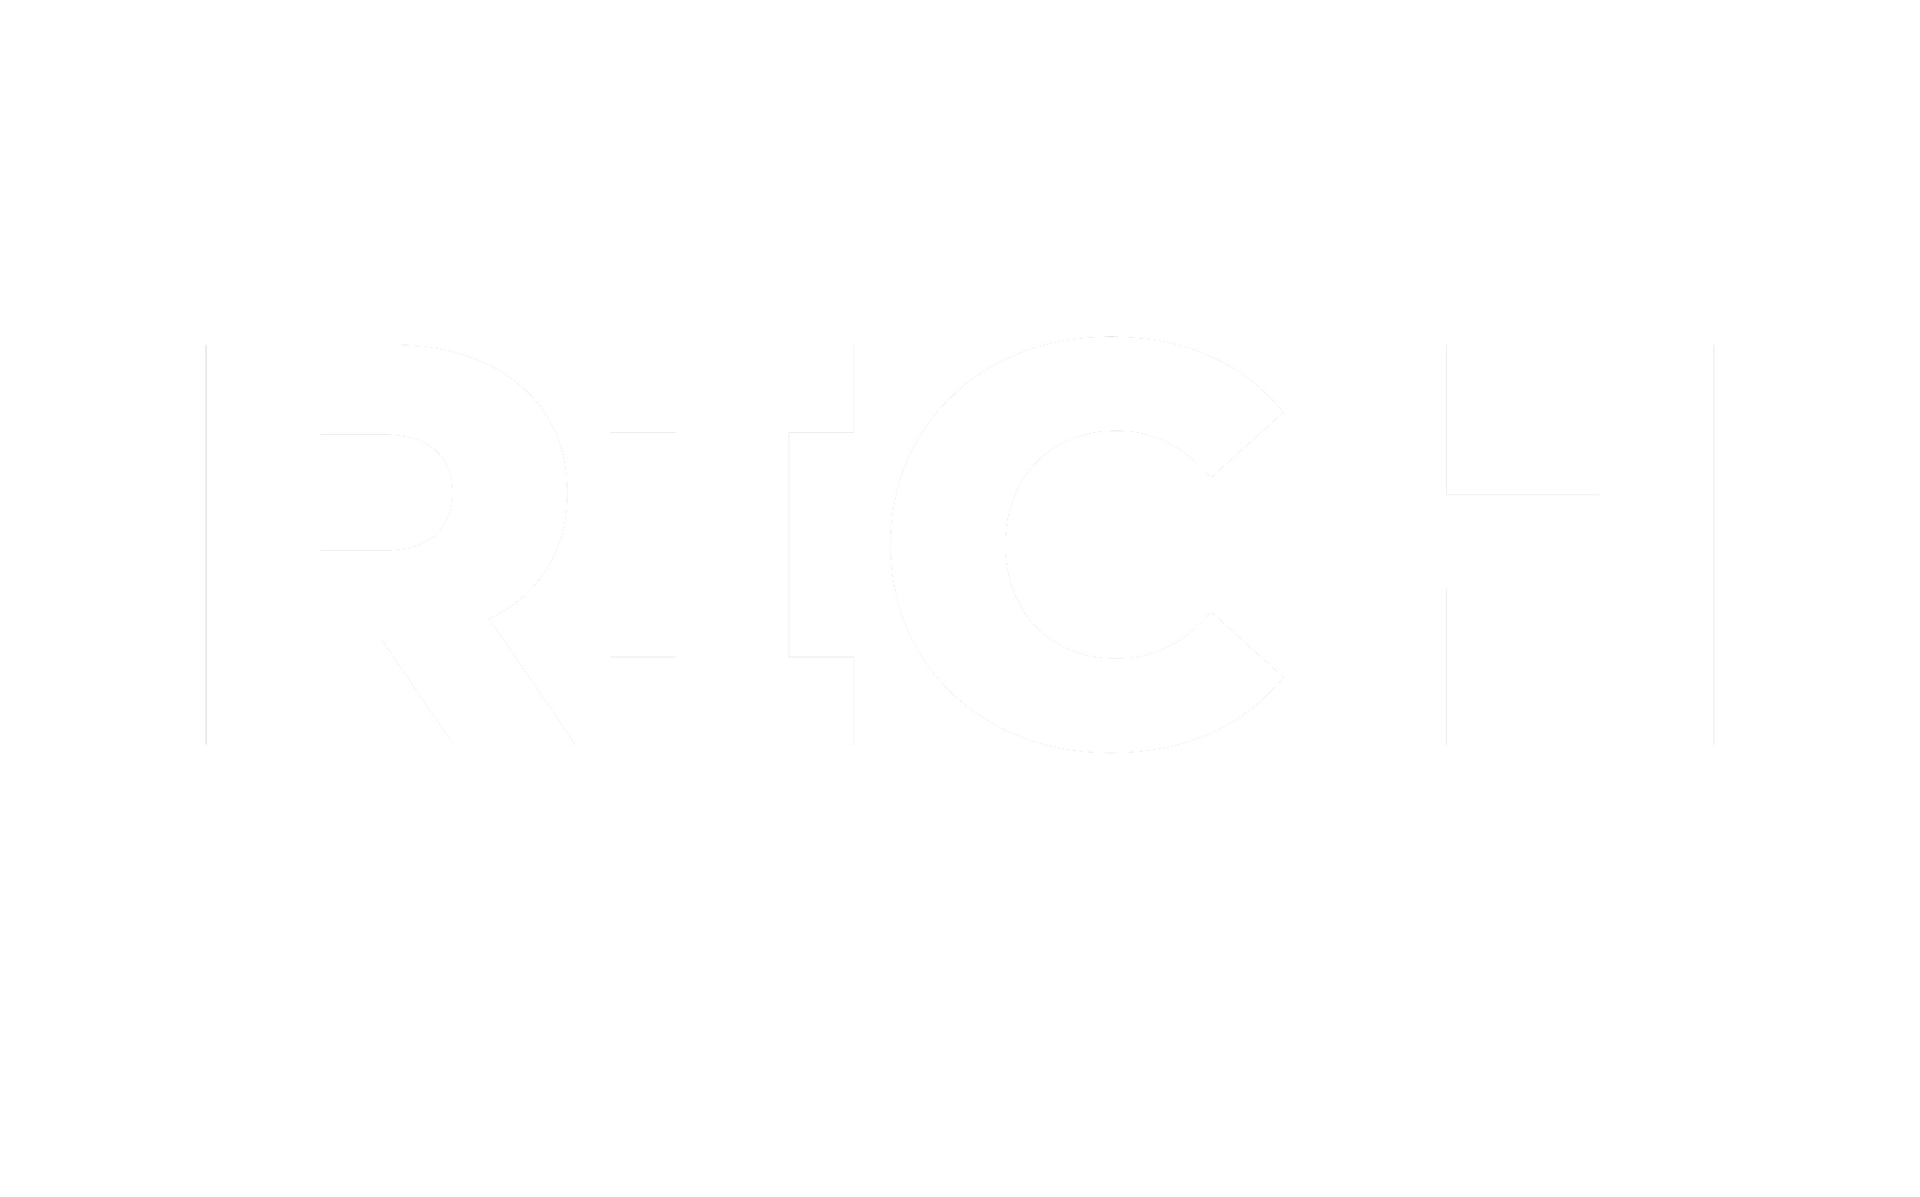 RichKeller.com